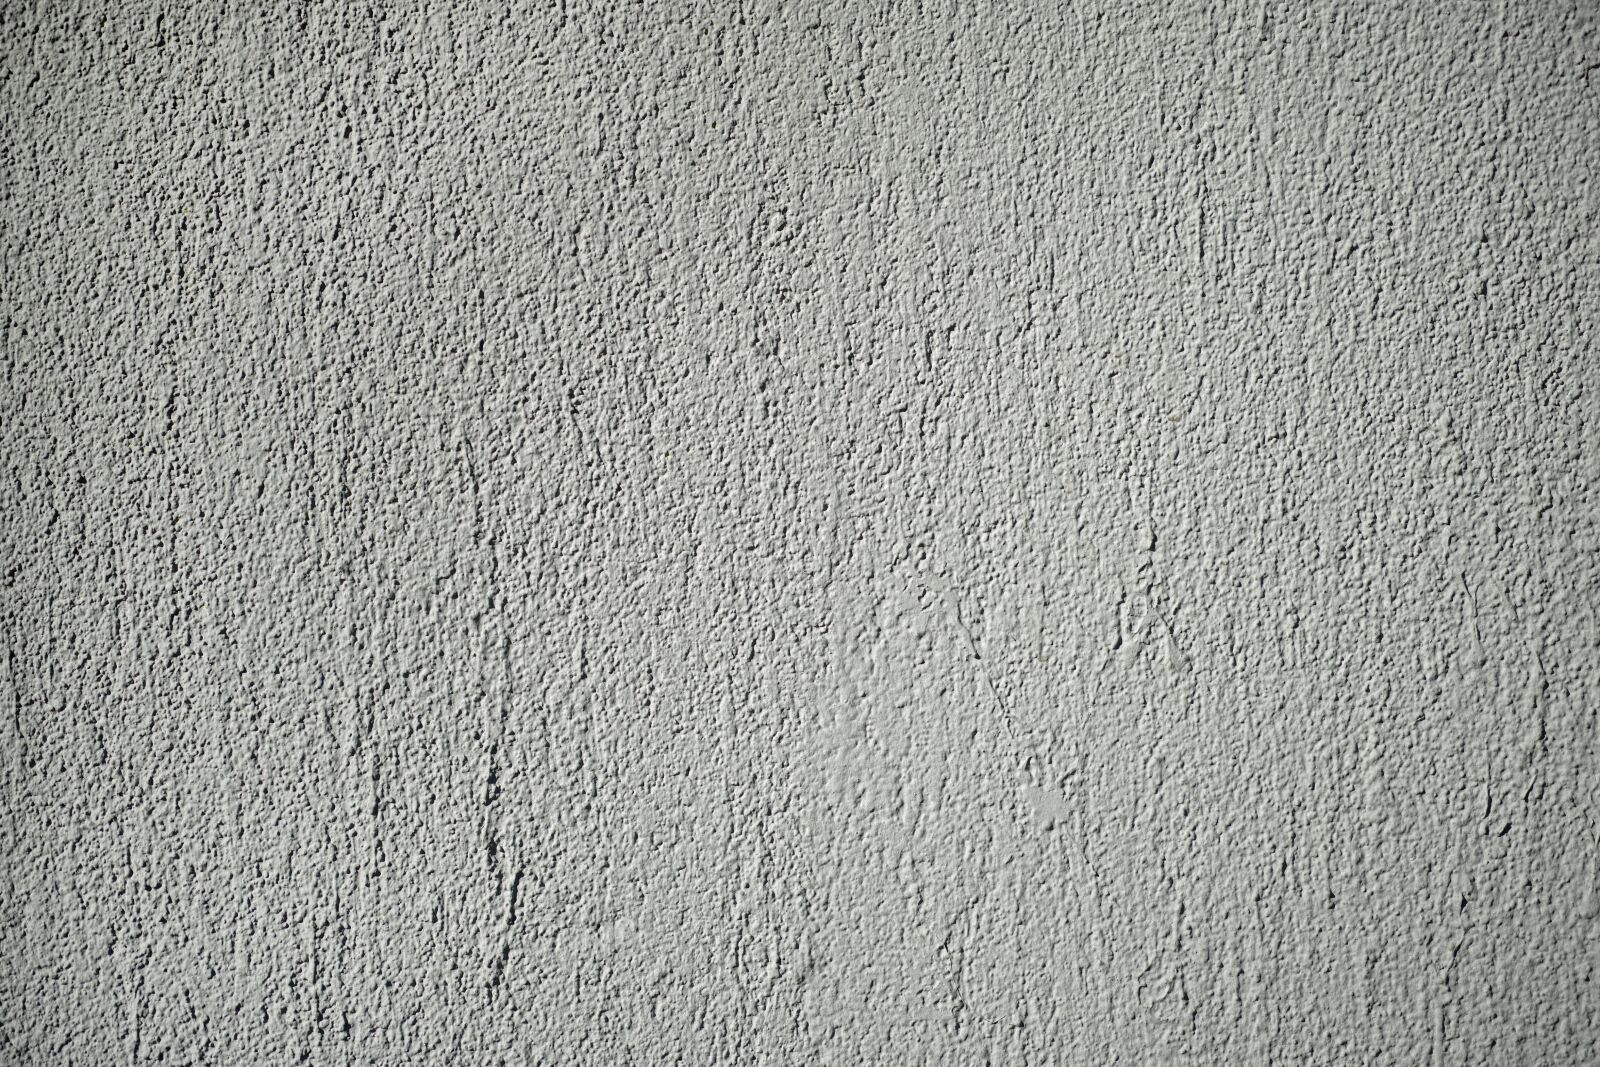 Sigma DP3 Merrill sample photo. Wall, plaster, grey photography